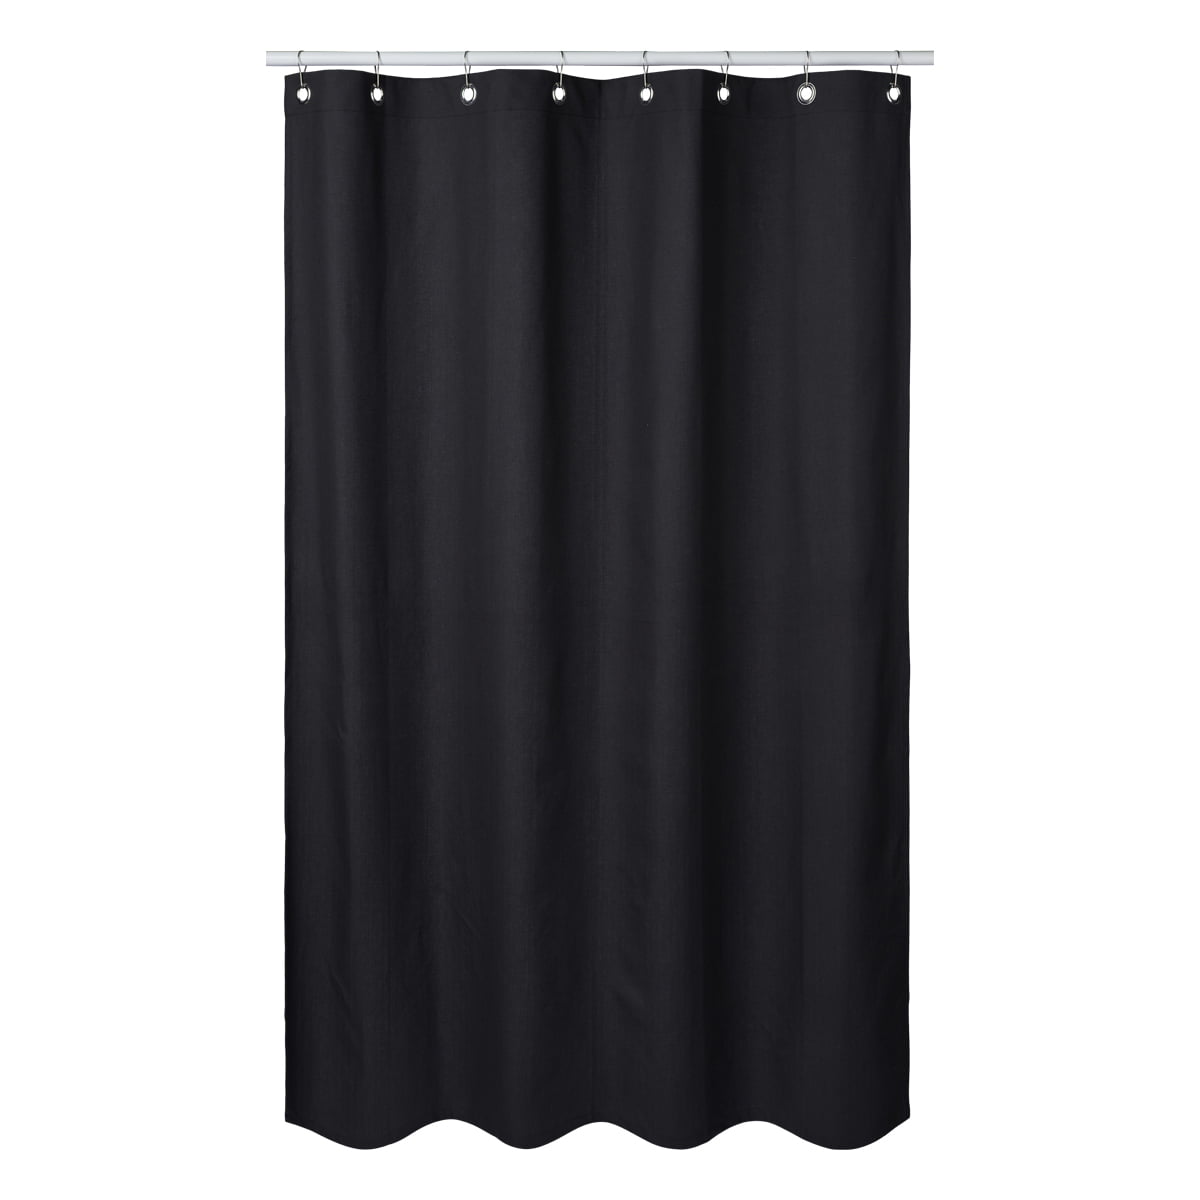 Organic Cotton Shower Curtain, Organic Cotton Shower Curtain Liner